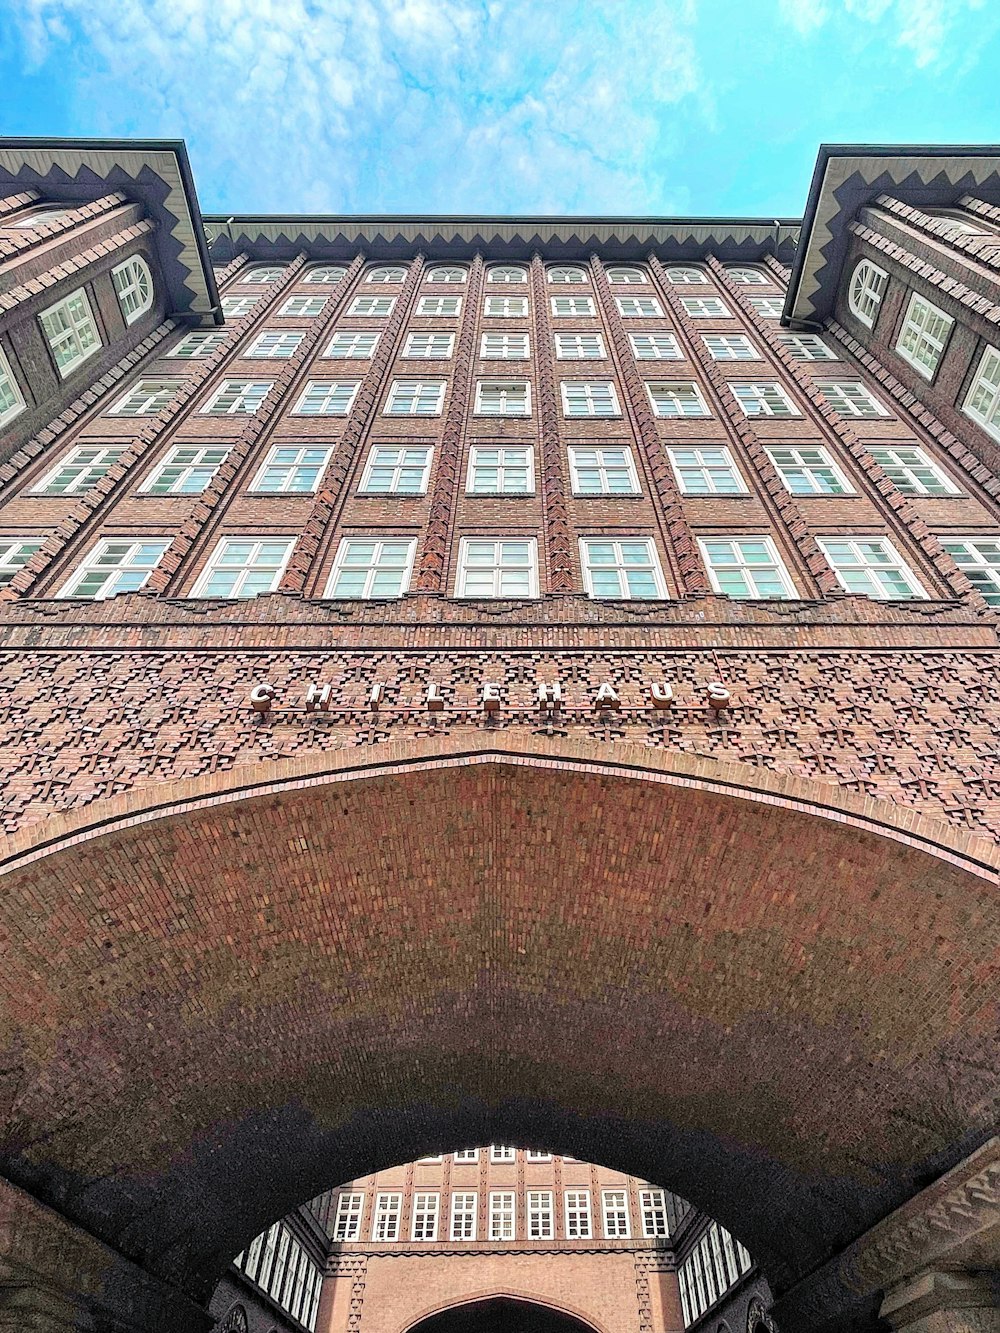 brown brick building under blue sky during daytime